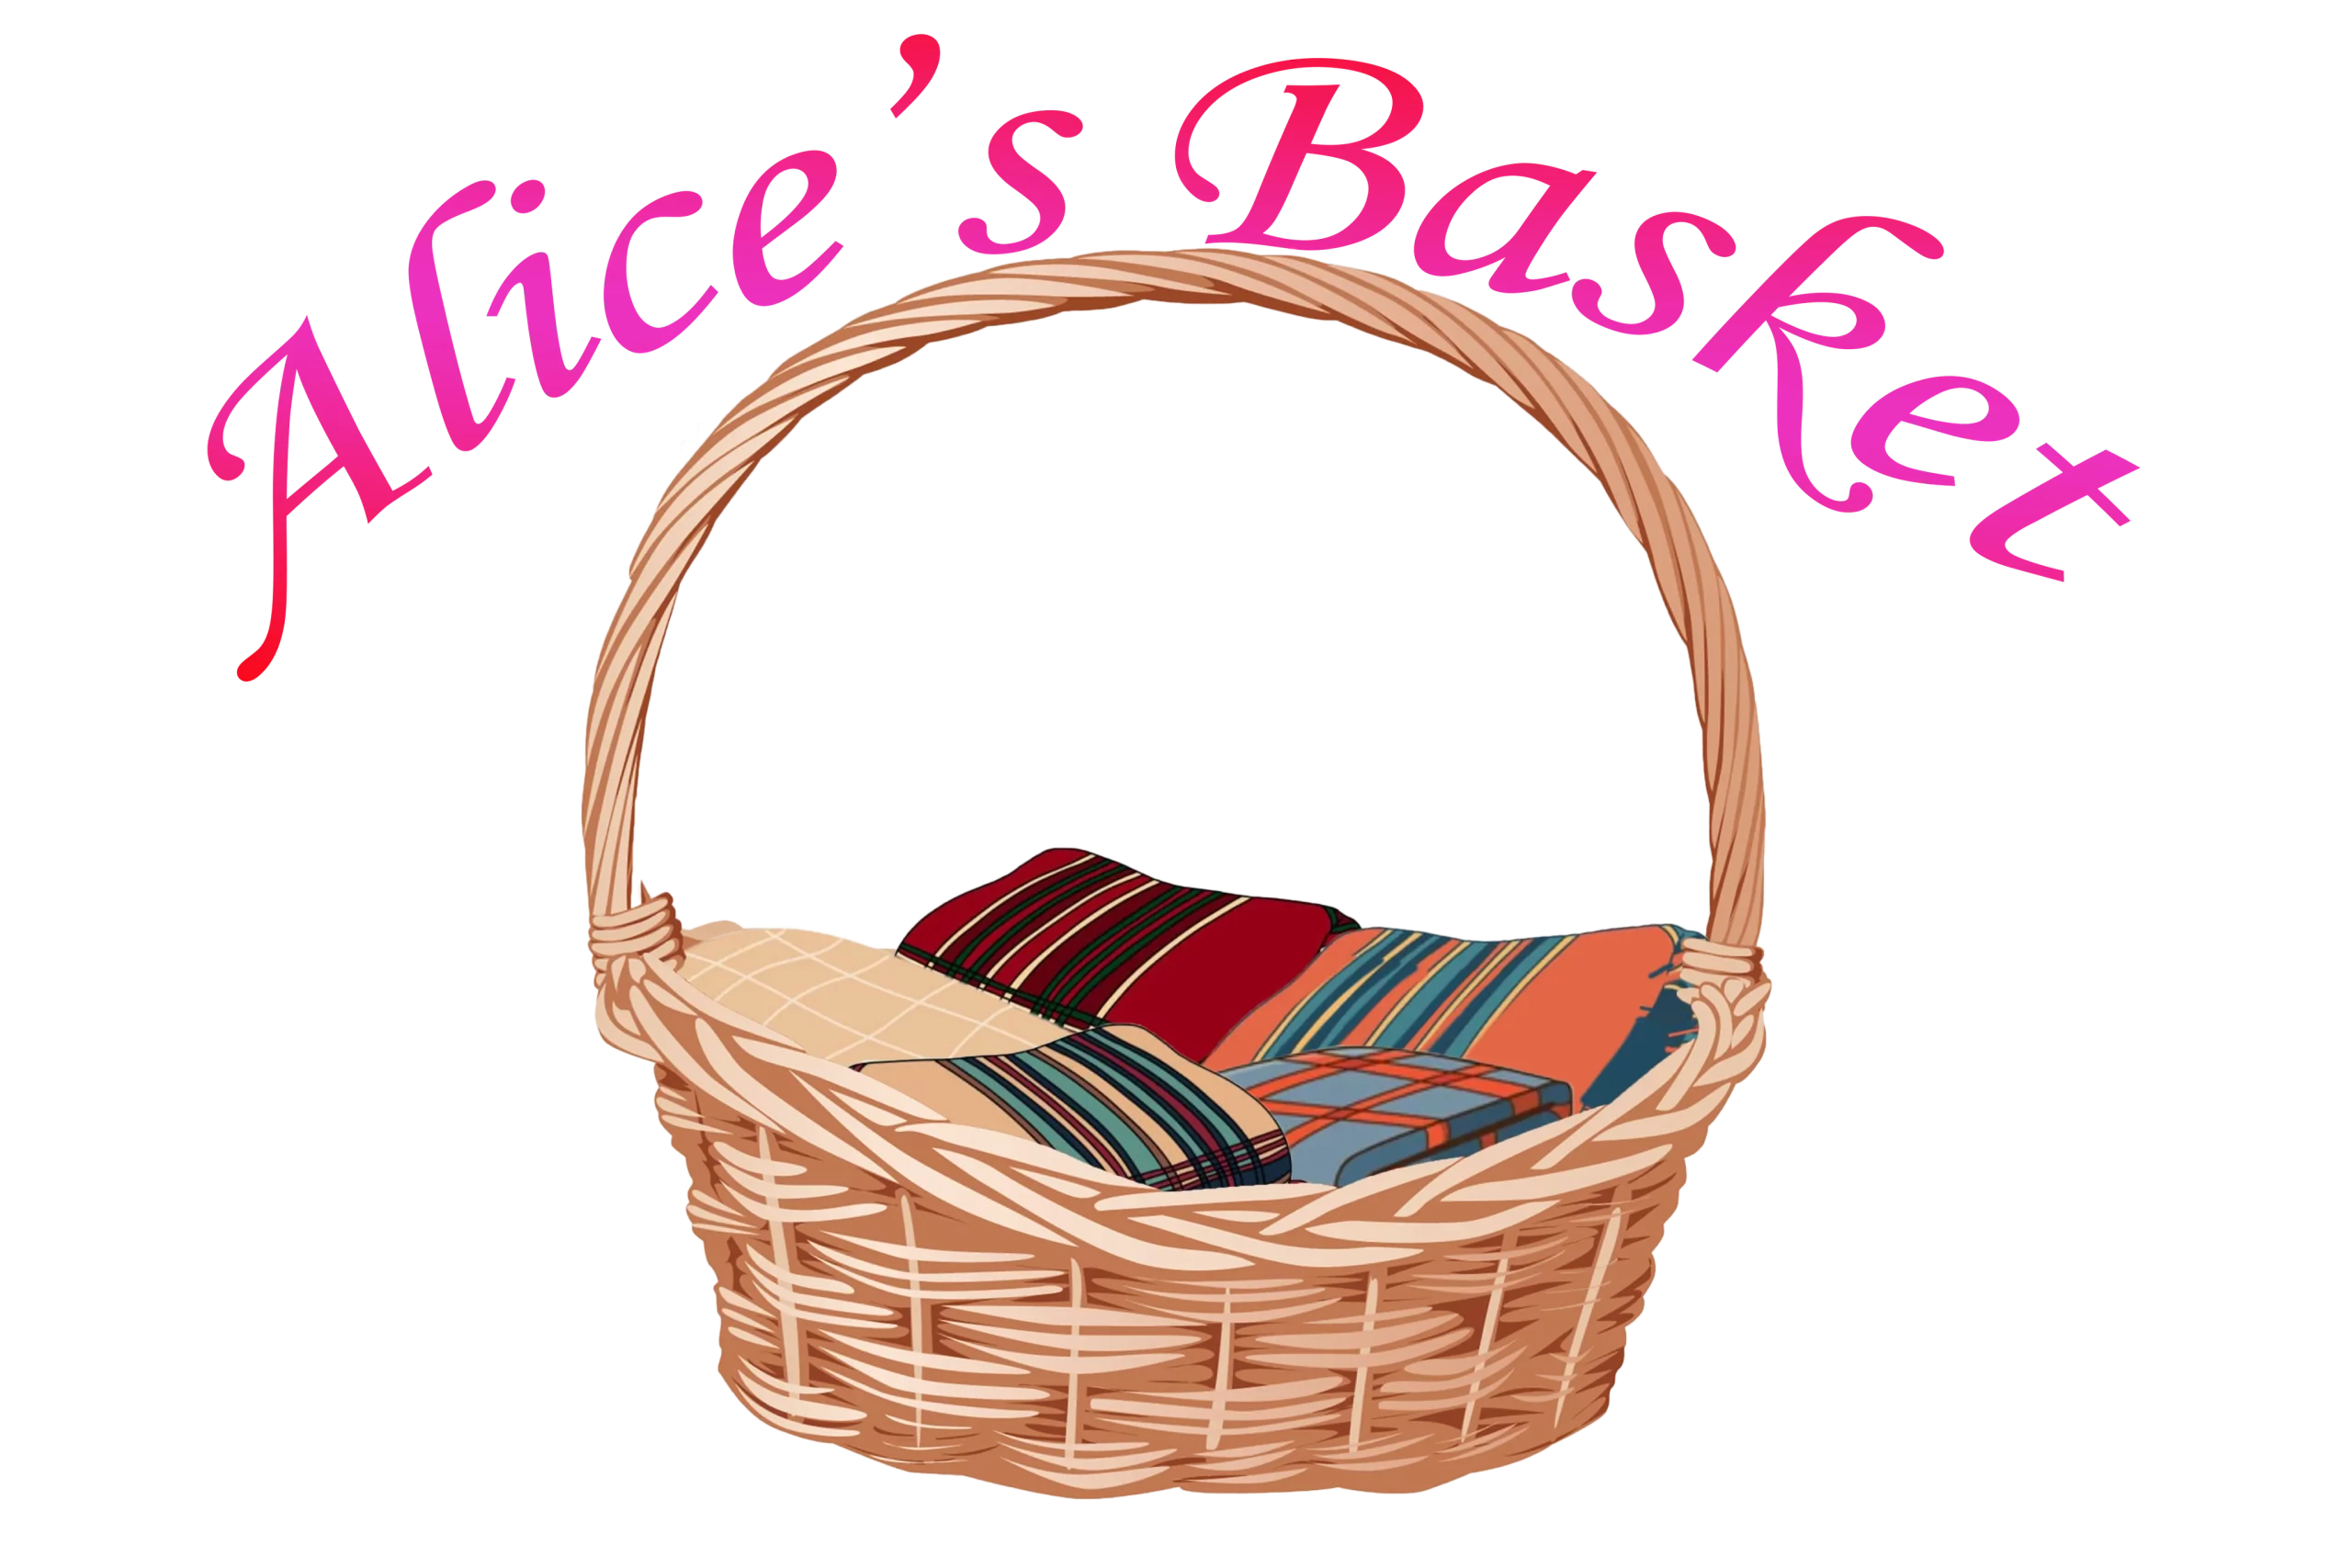 Alice's Basket